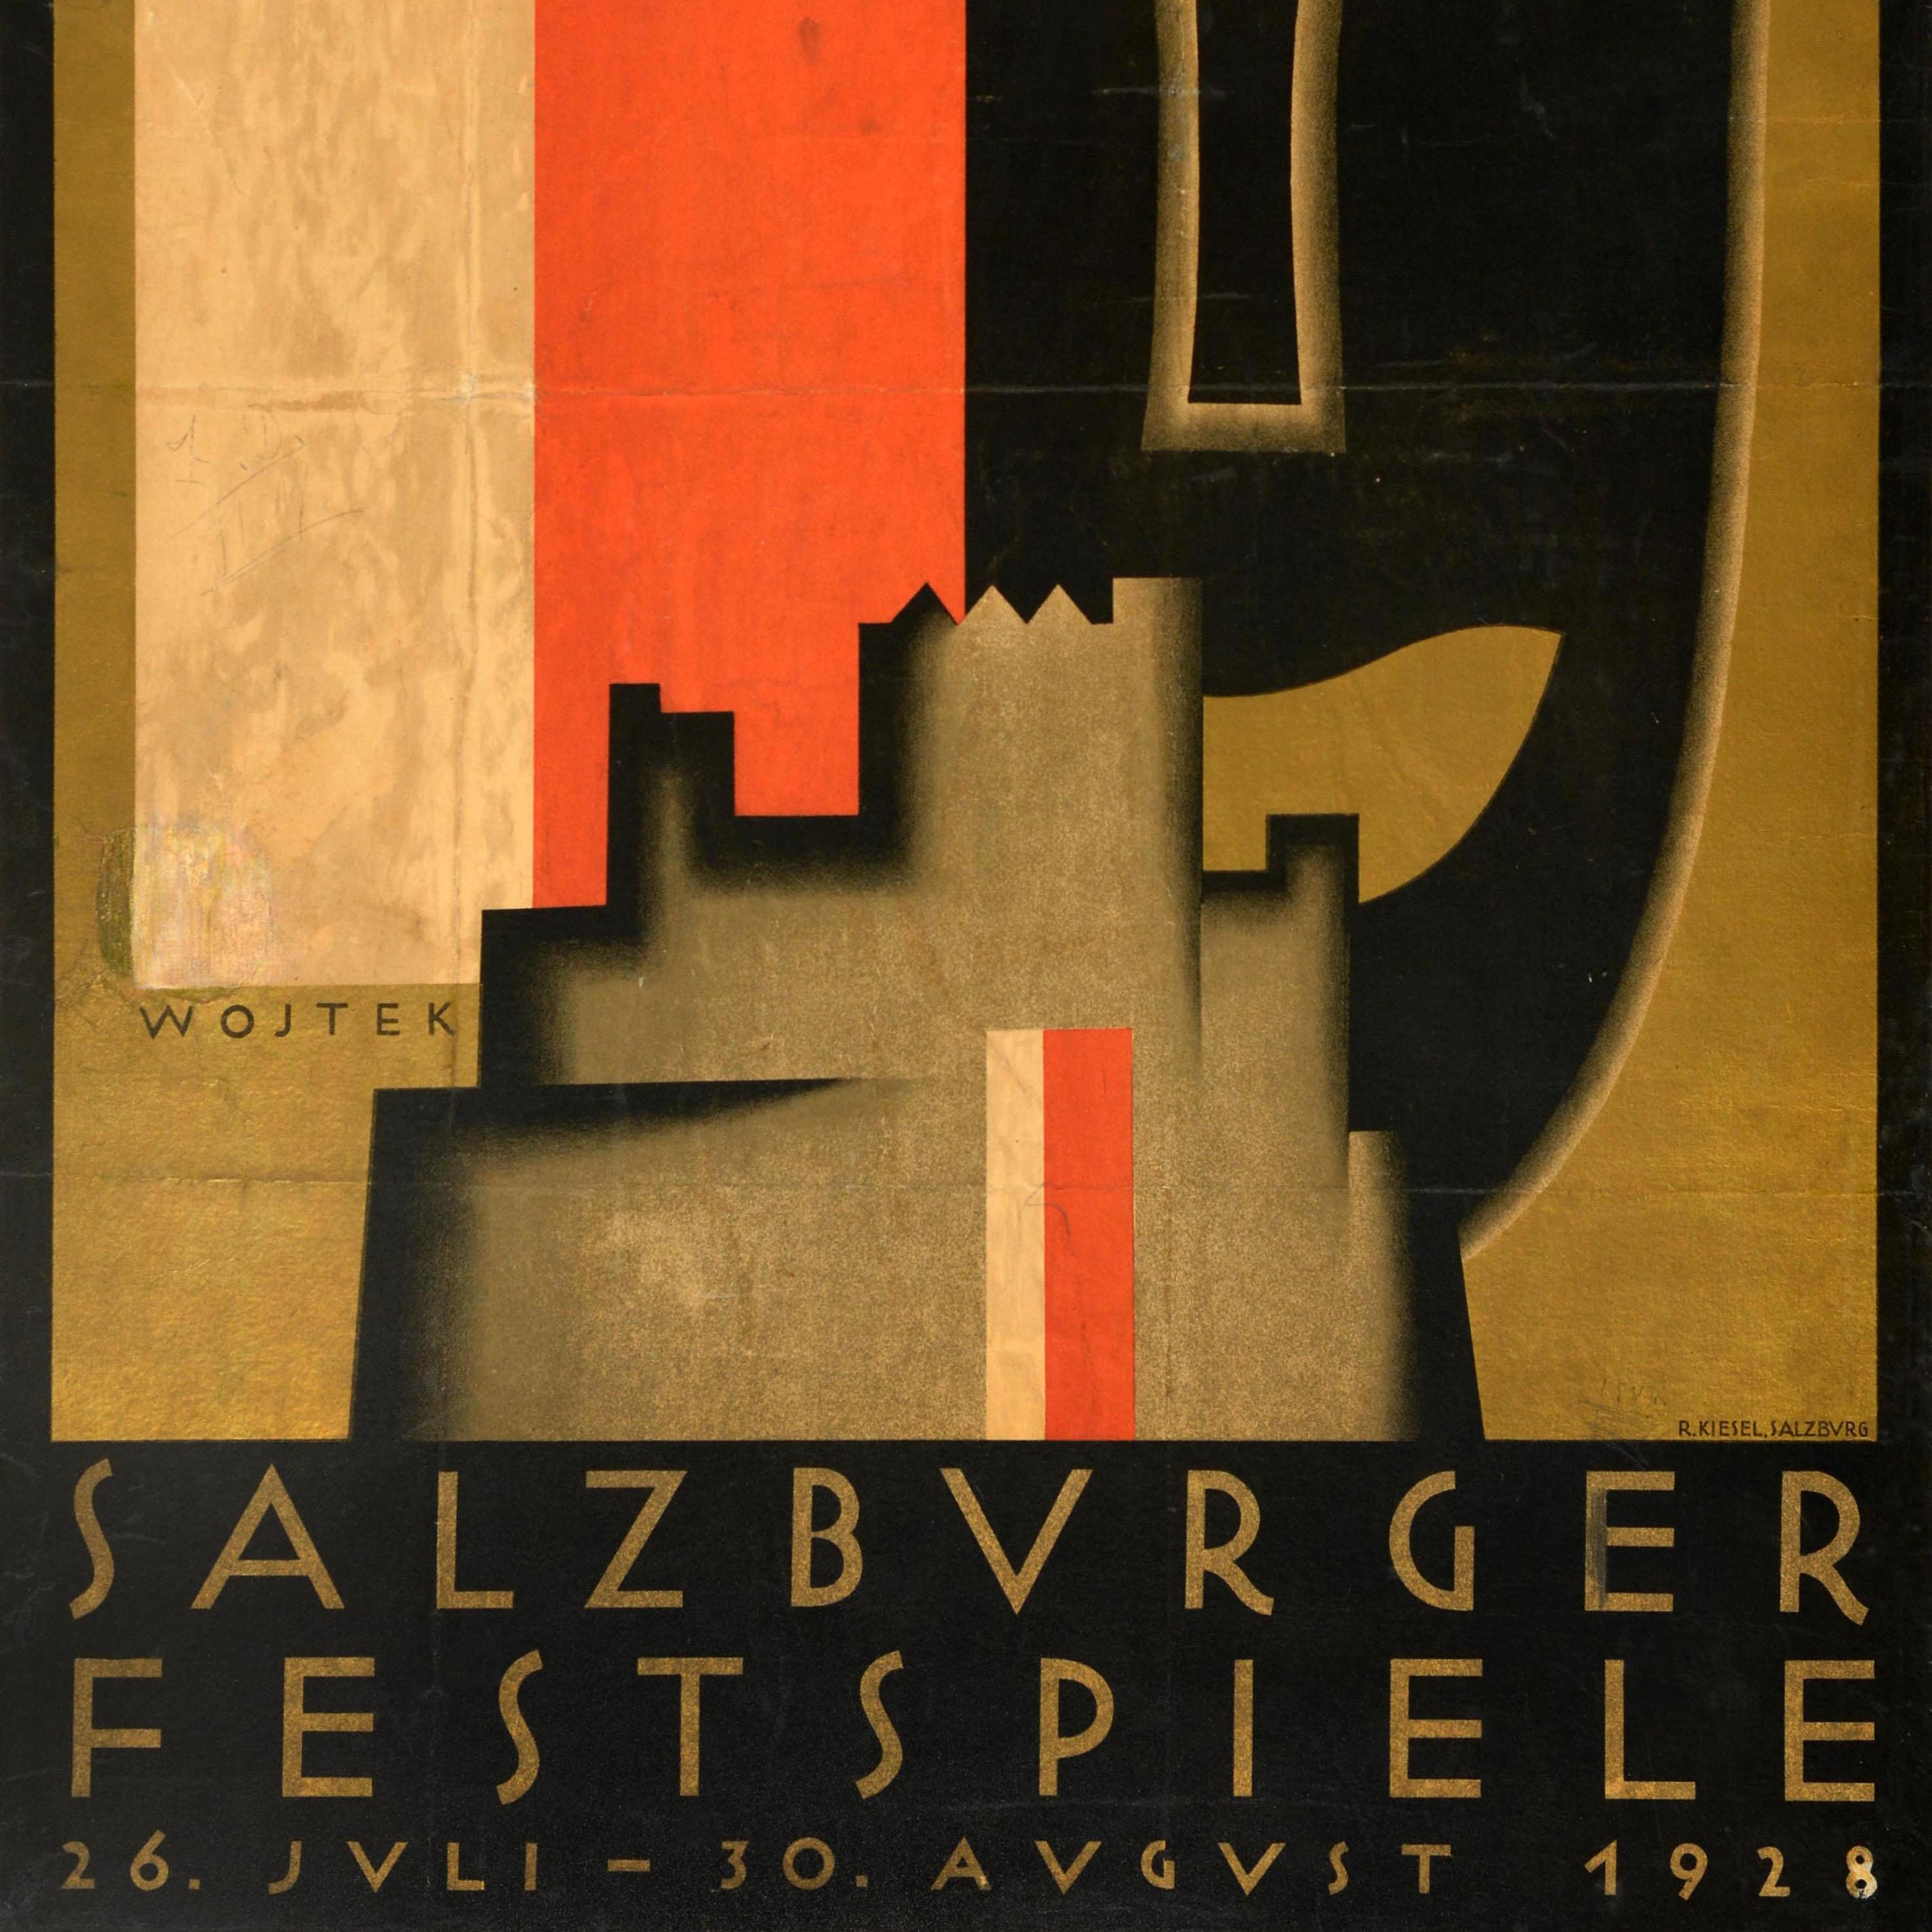 Original Vintage Advertising Poster Salzburg Festival Salzburger Festspiele 1928 In Fair Condition For Sale In London, GB